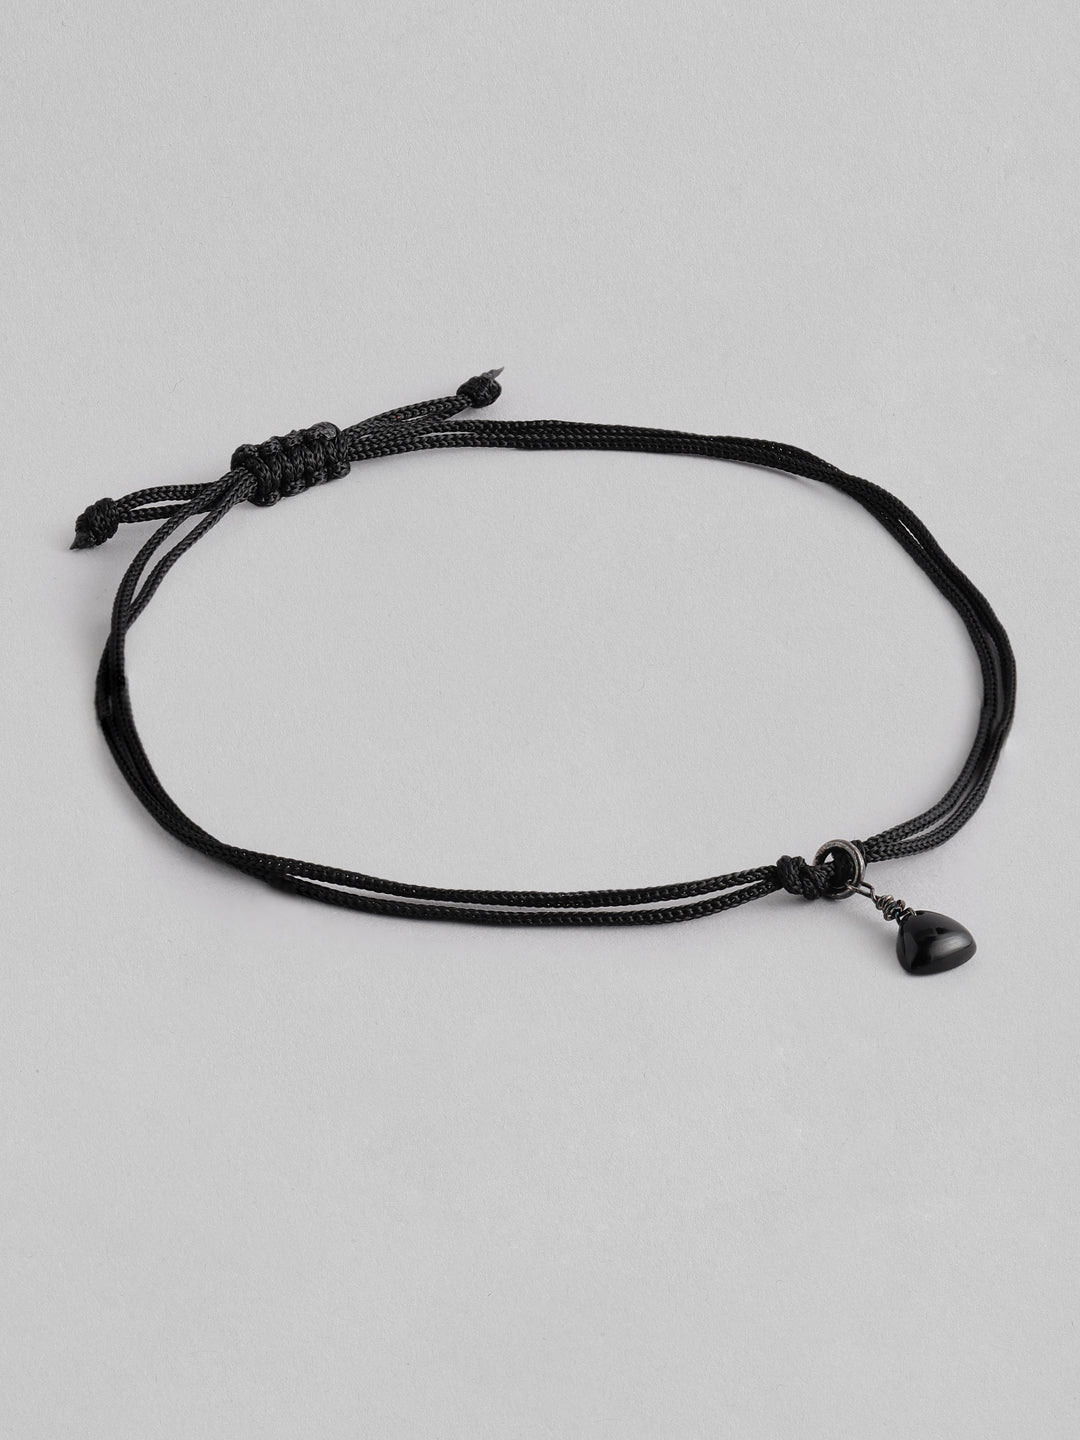 Buy jewel string stylish blue evil eye bracelet 10mm for boys men black  at Amazonin